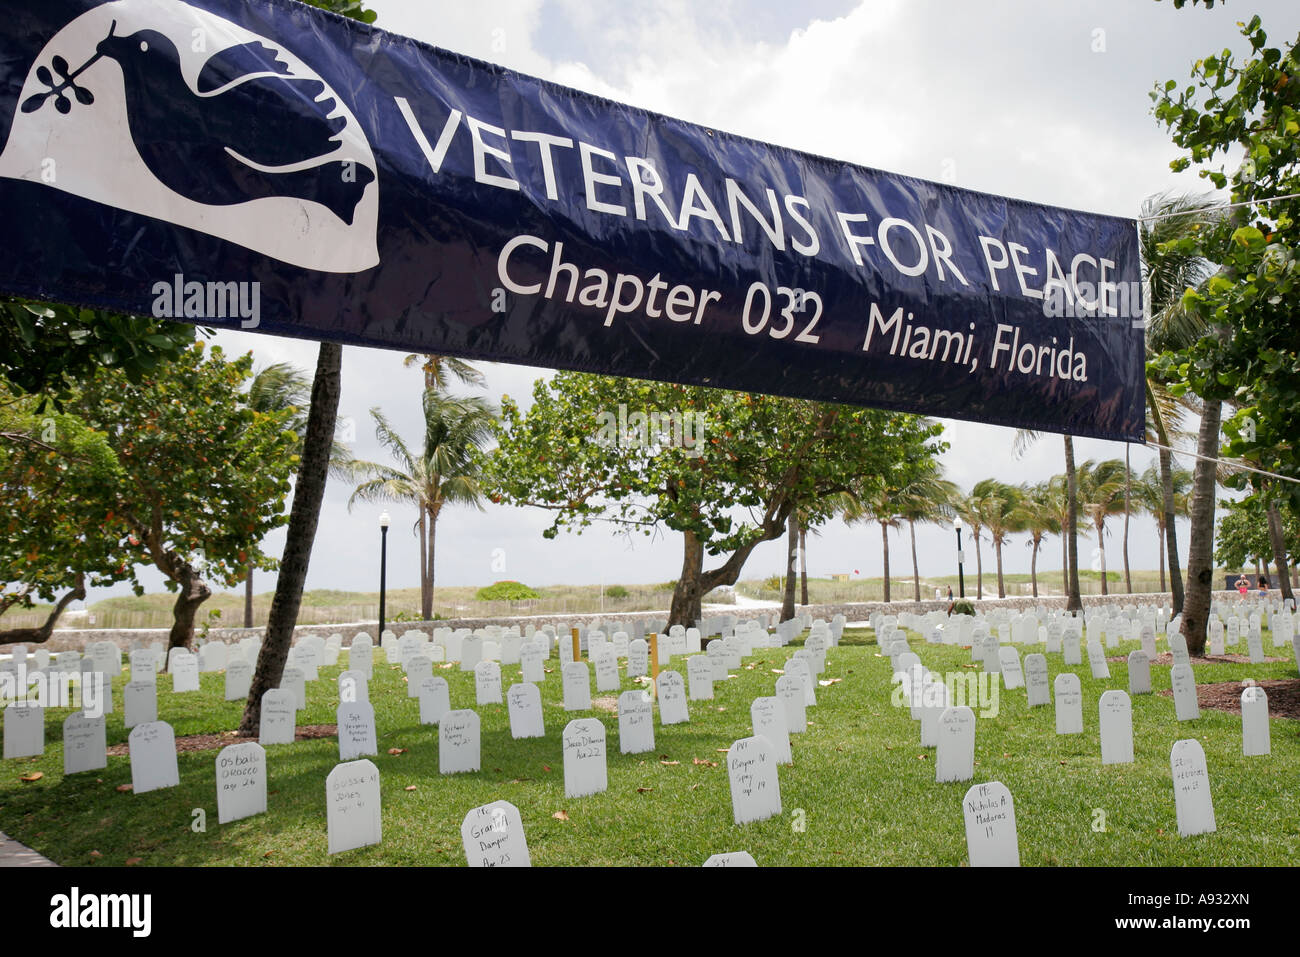 Miami Beach Florida,South Beach,Ocean Drive,Lummus Park,Veterans for Peace,mock gravestones,Iraqi War dead,FL070527023 Stock Photo